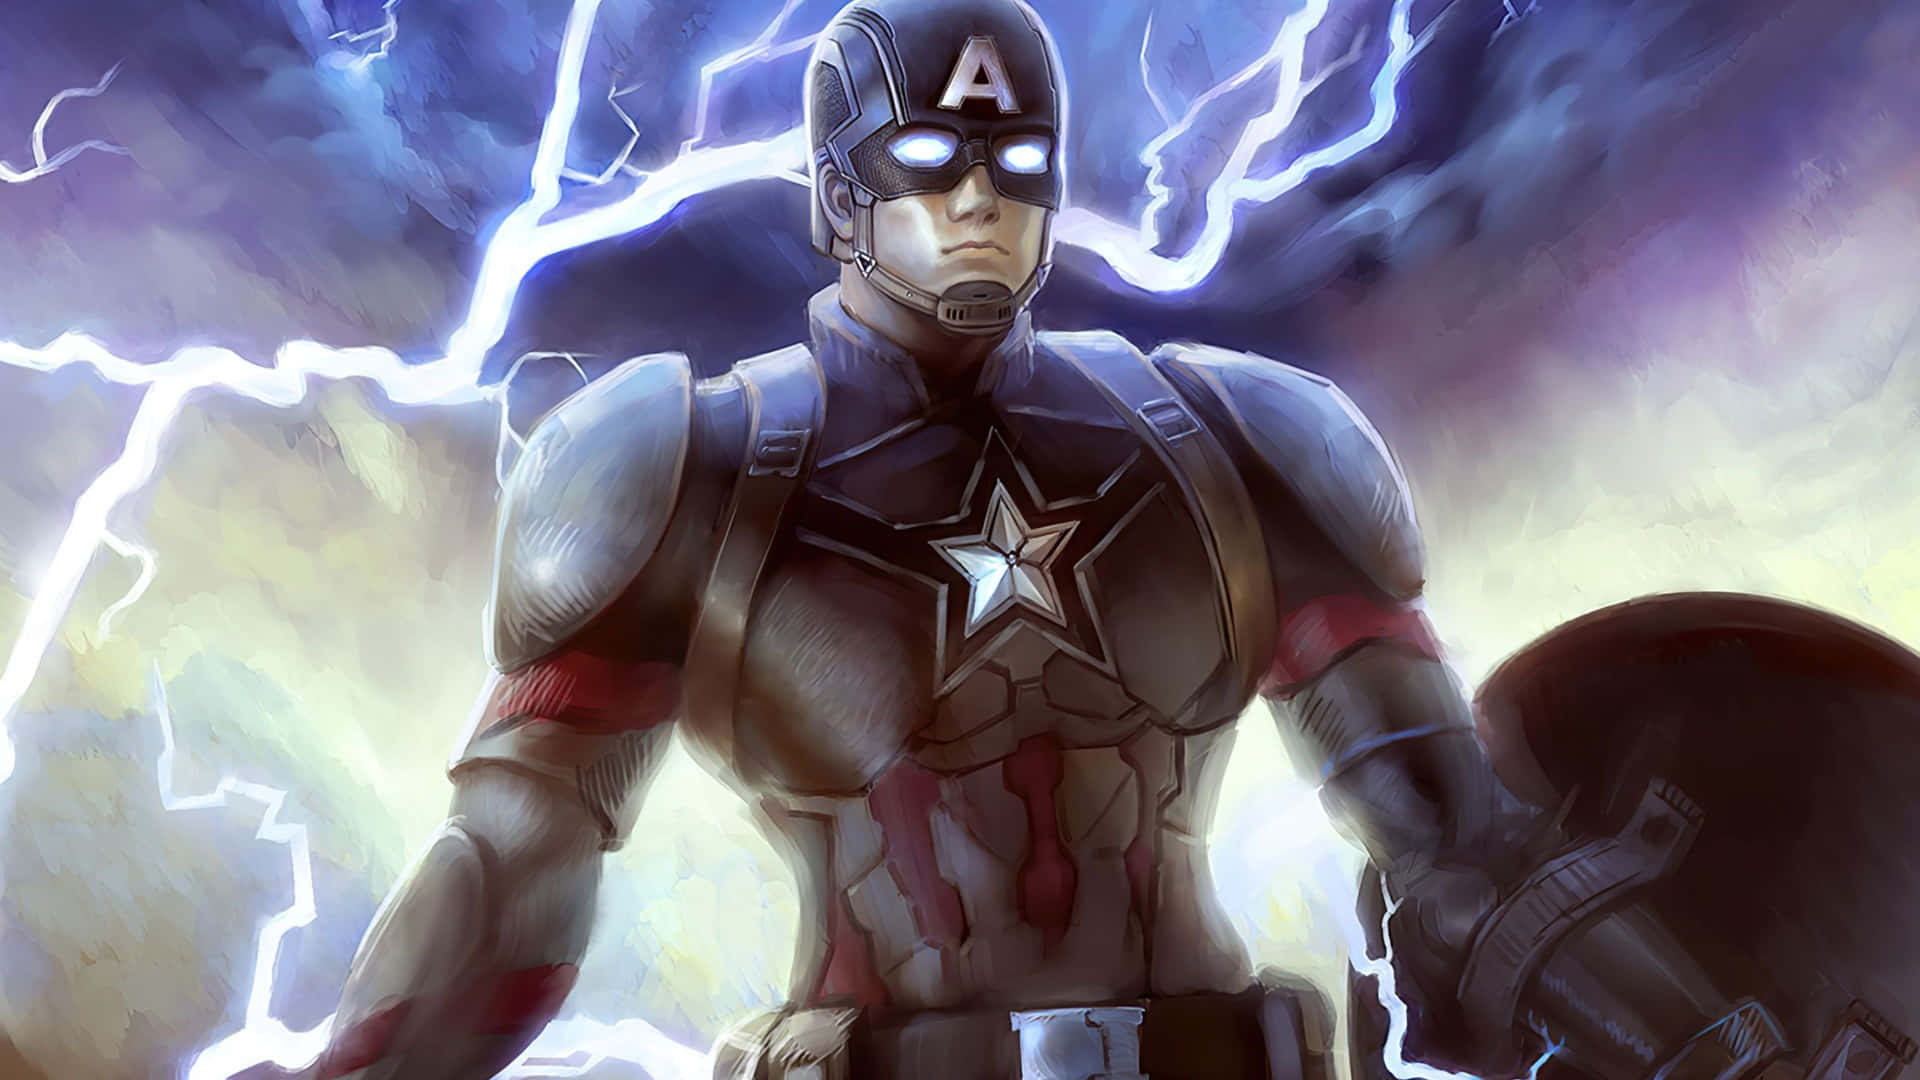 Captain America - An American Icon